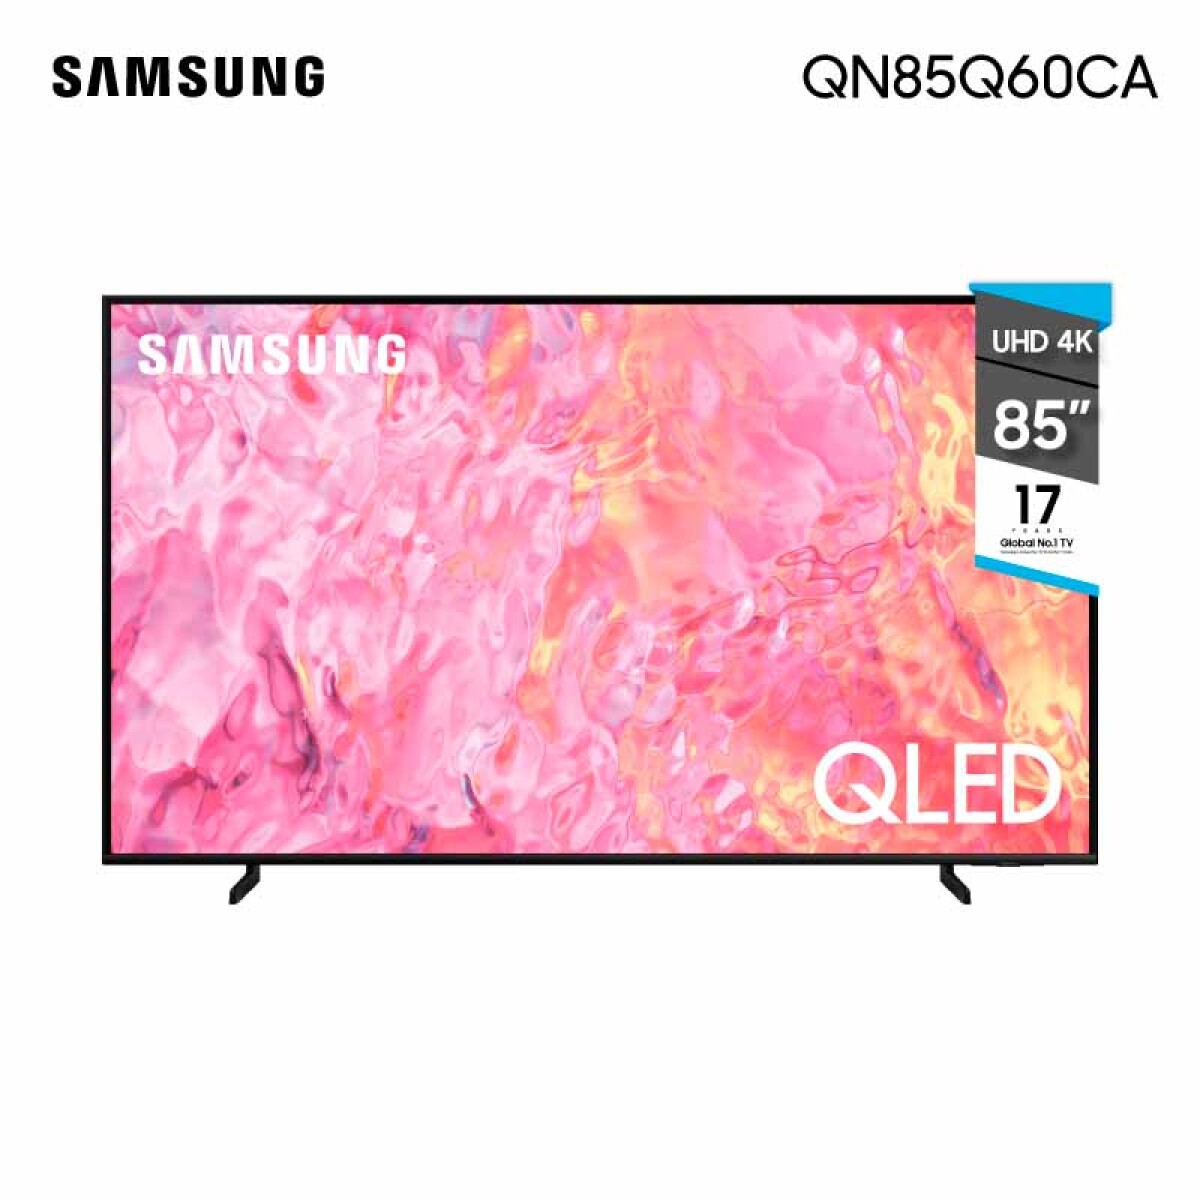 Smart TV Samsung QLED 85" UHD 4K - QN85Q60CA 